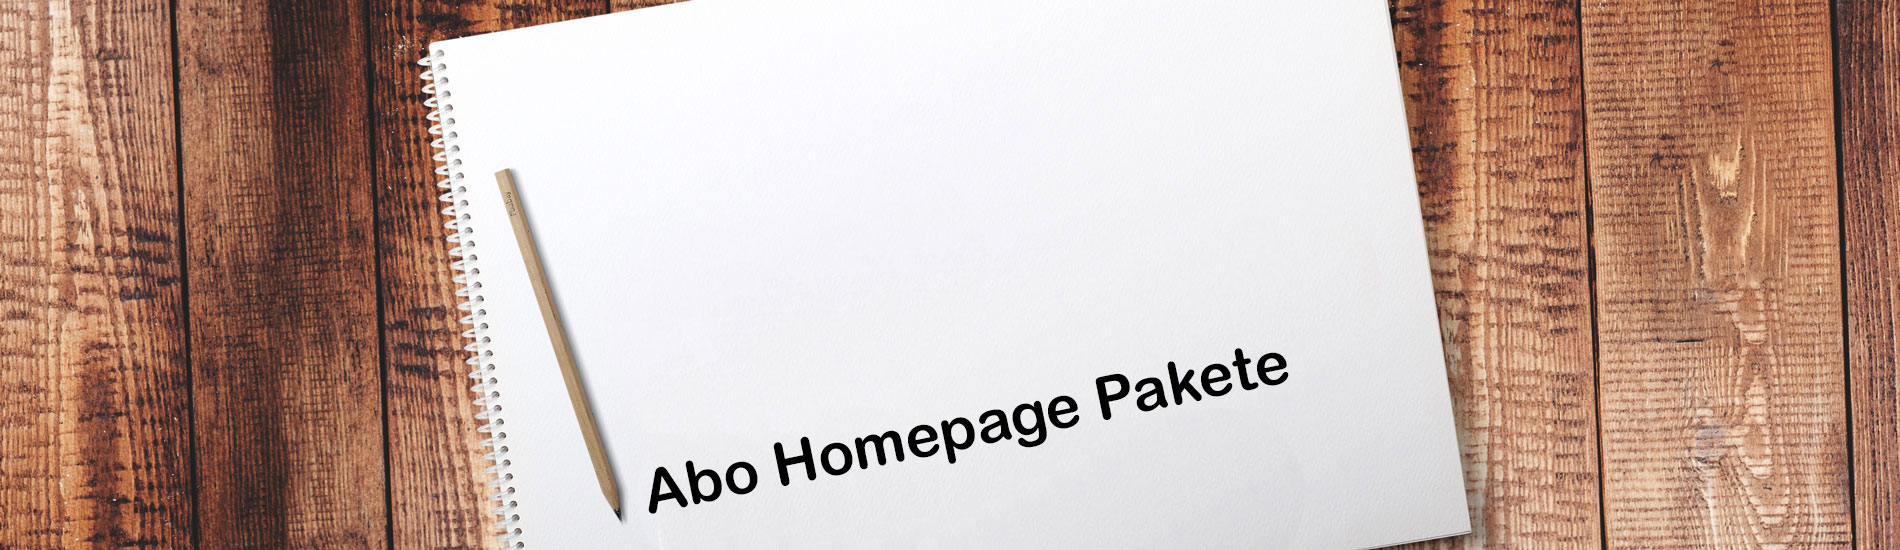 abo-homepage-pakete